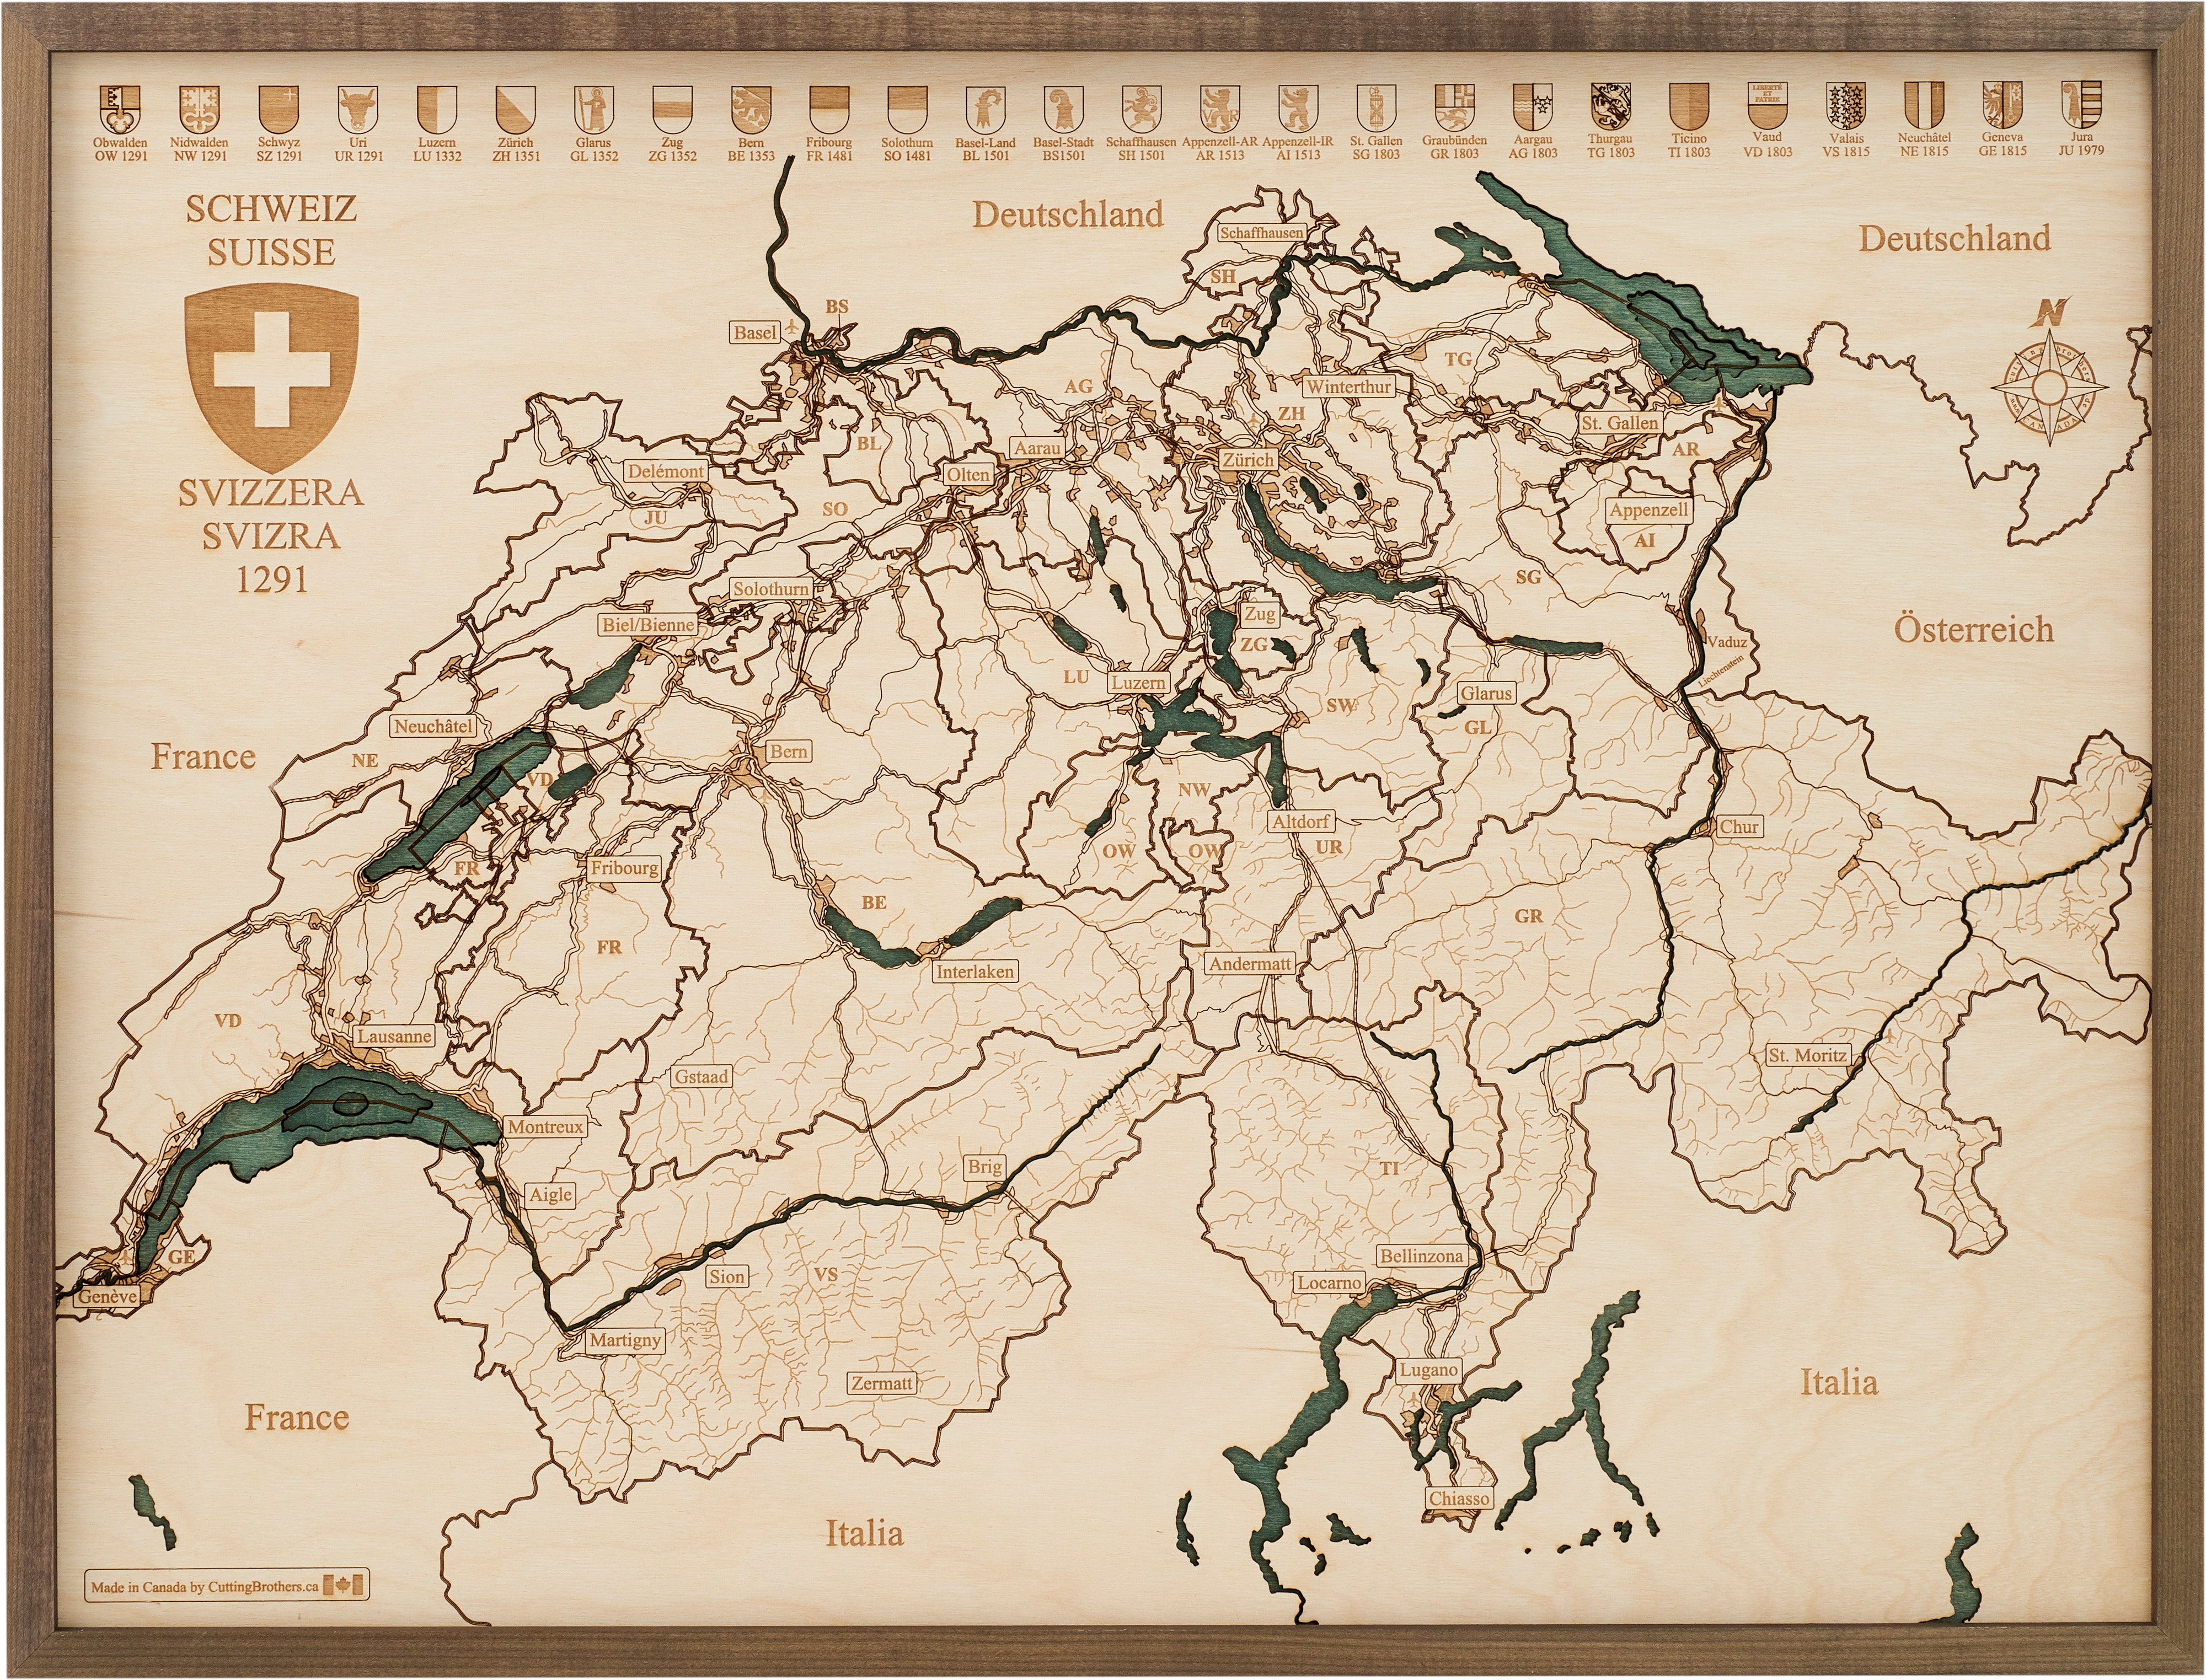 SWITZERLAND 3D wooden wall map - version L